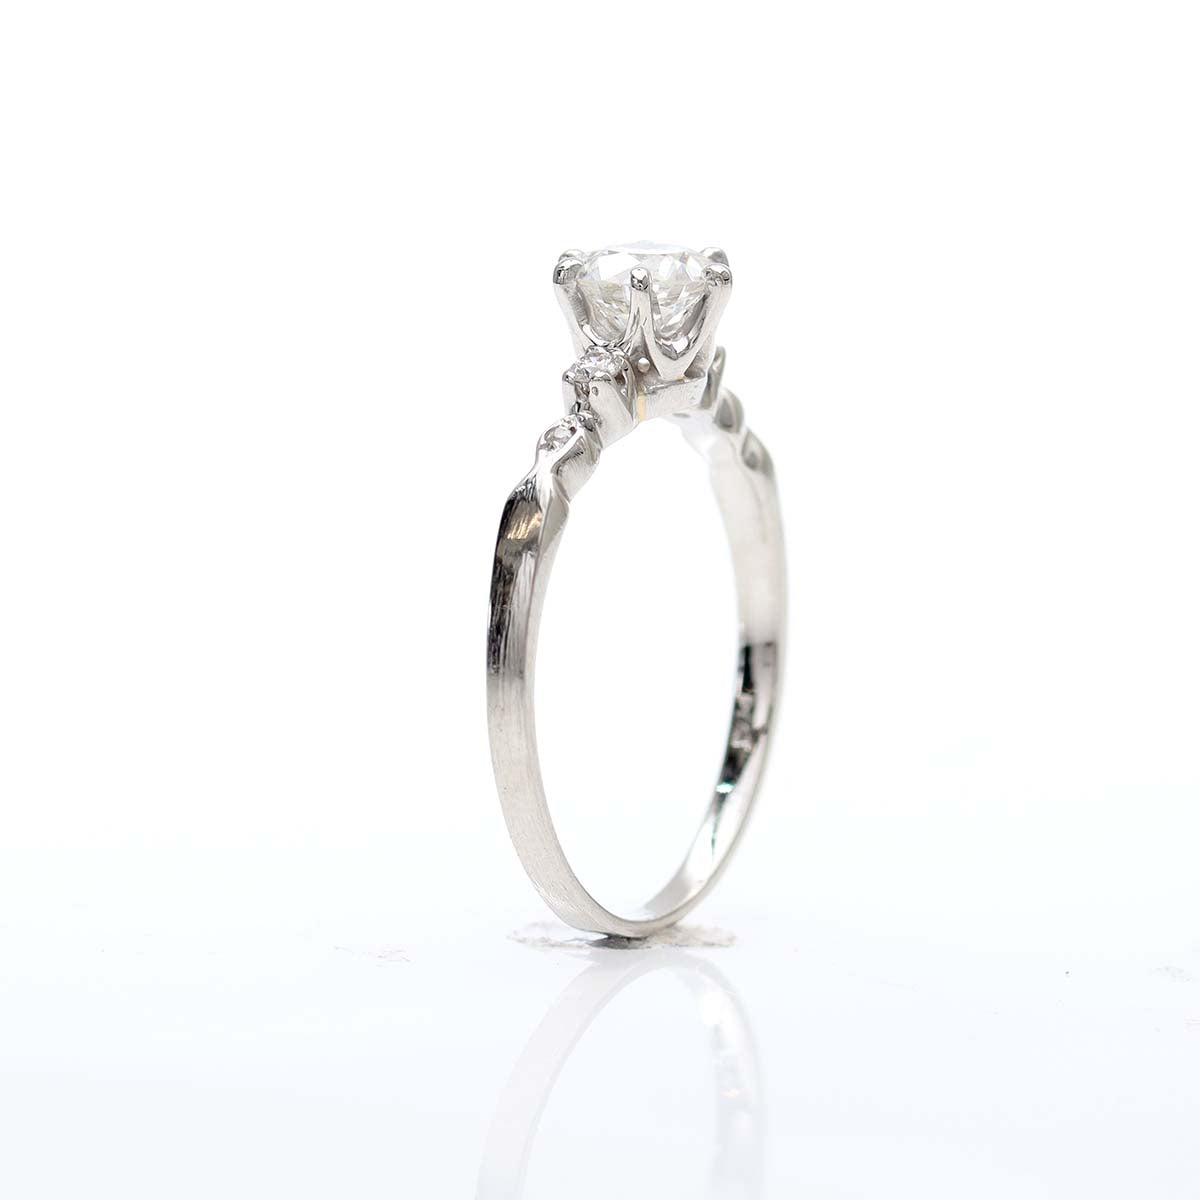 The Cordelia Replica Edwardian Engagement Ring #3510-4